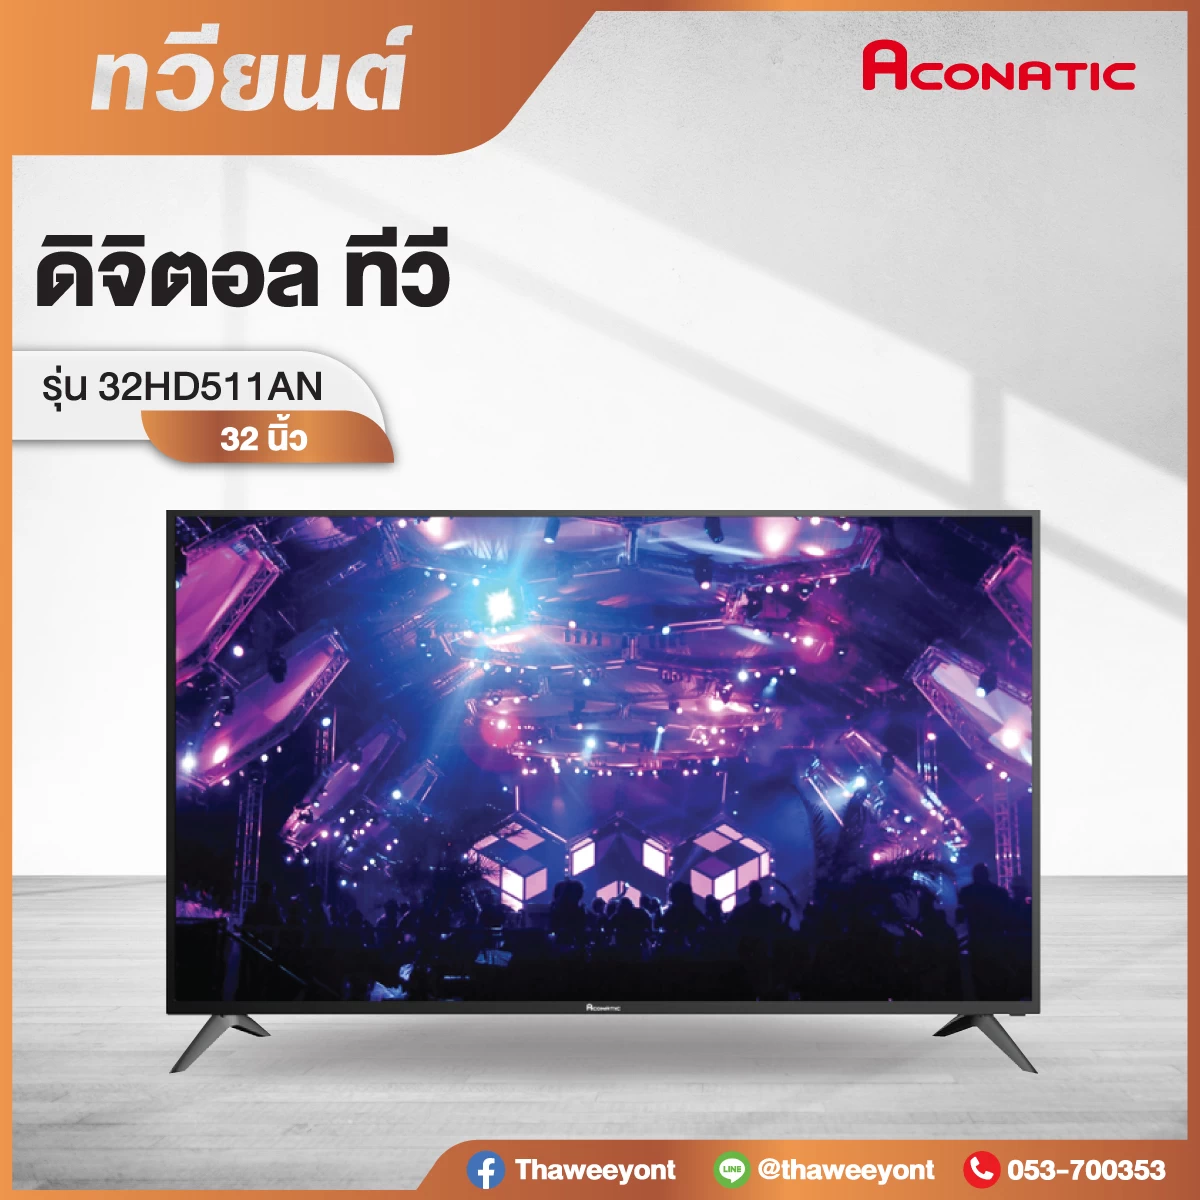 ACONATIC TV HD LED รุ่น 32HD511AN ขนาดหน้าจอ 32 นิ้ว (จำนวนจำกัด)